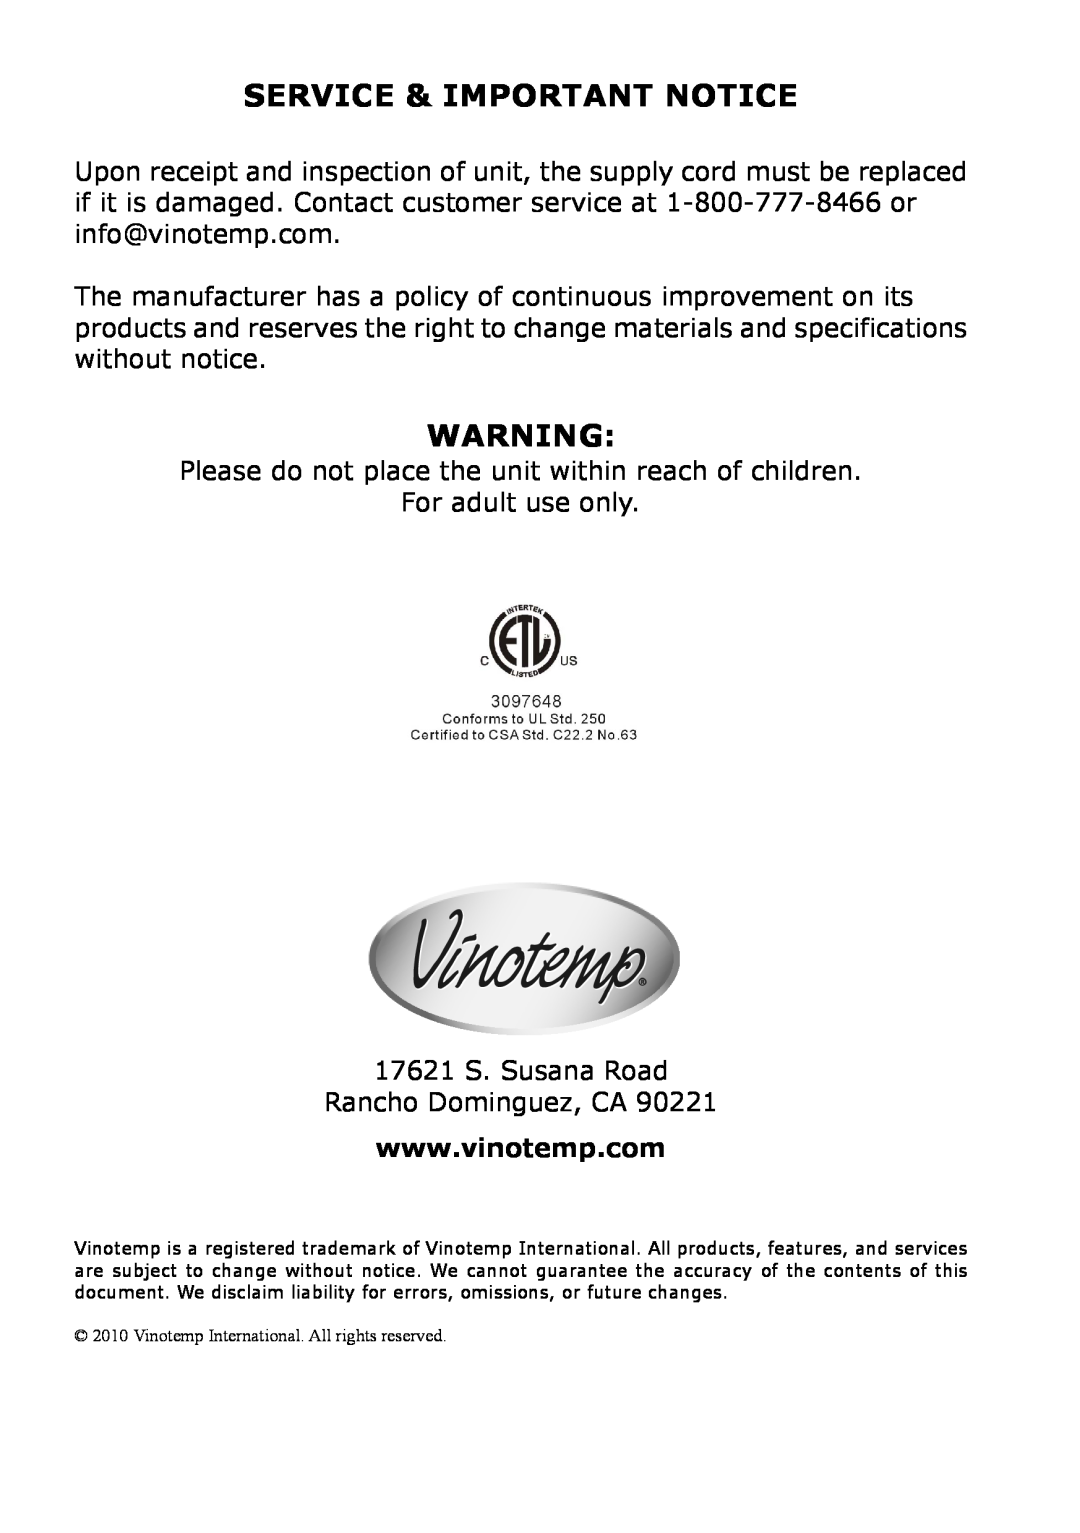 Vinotemp VT-15 TS owner manual Service & Important Notice 